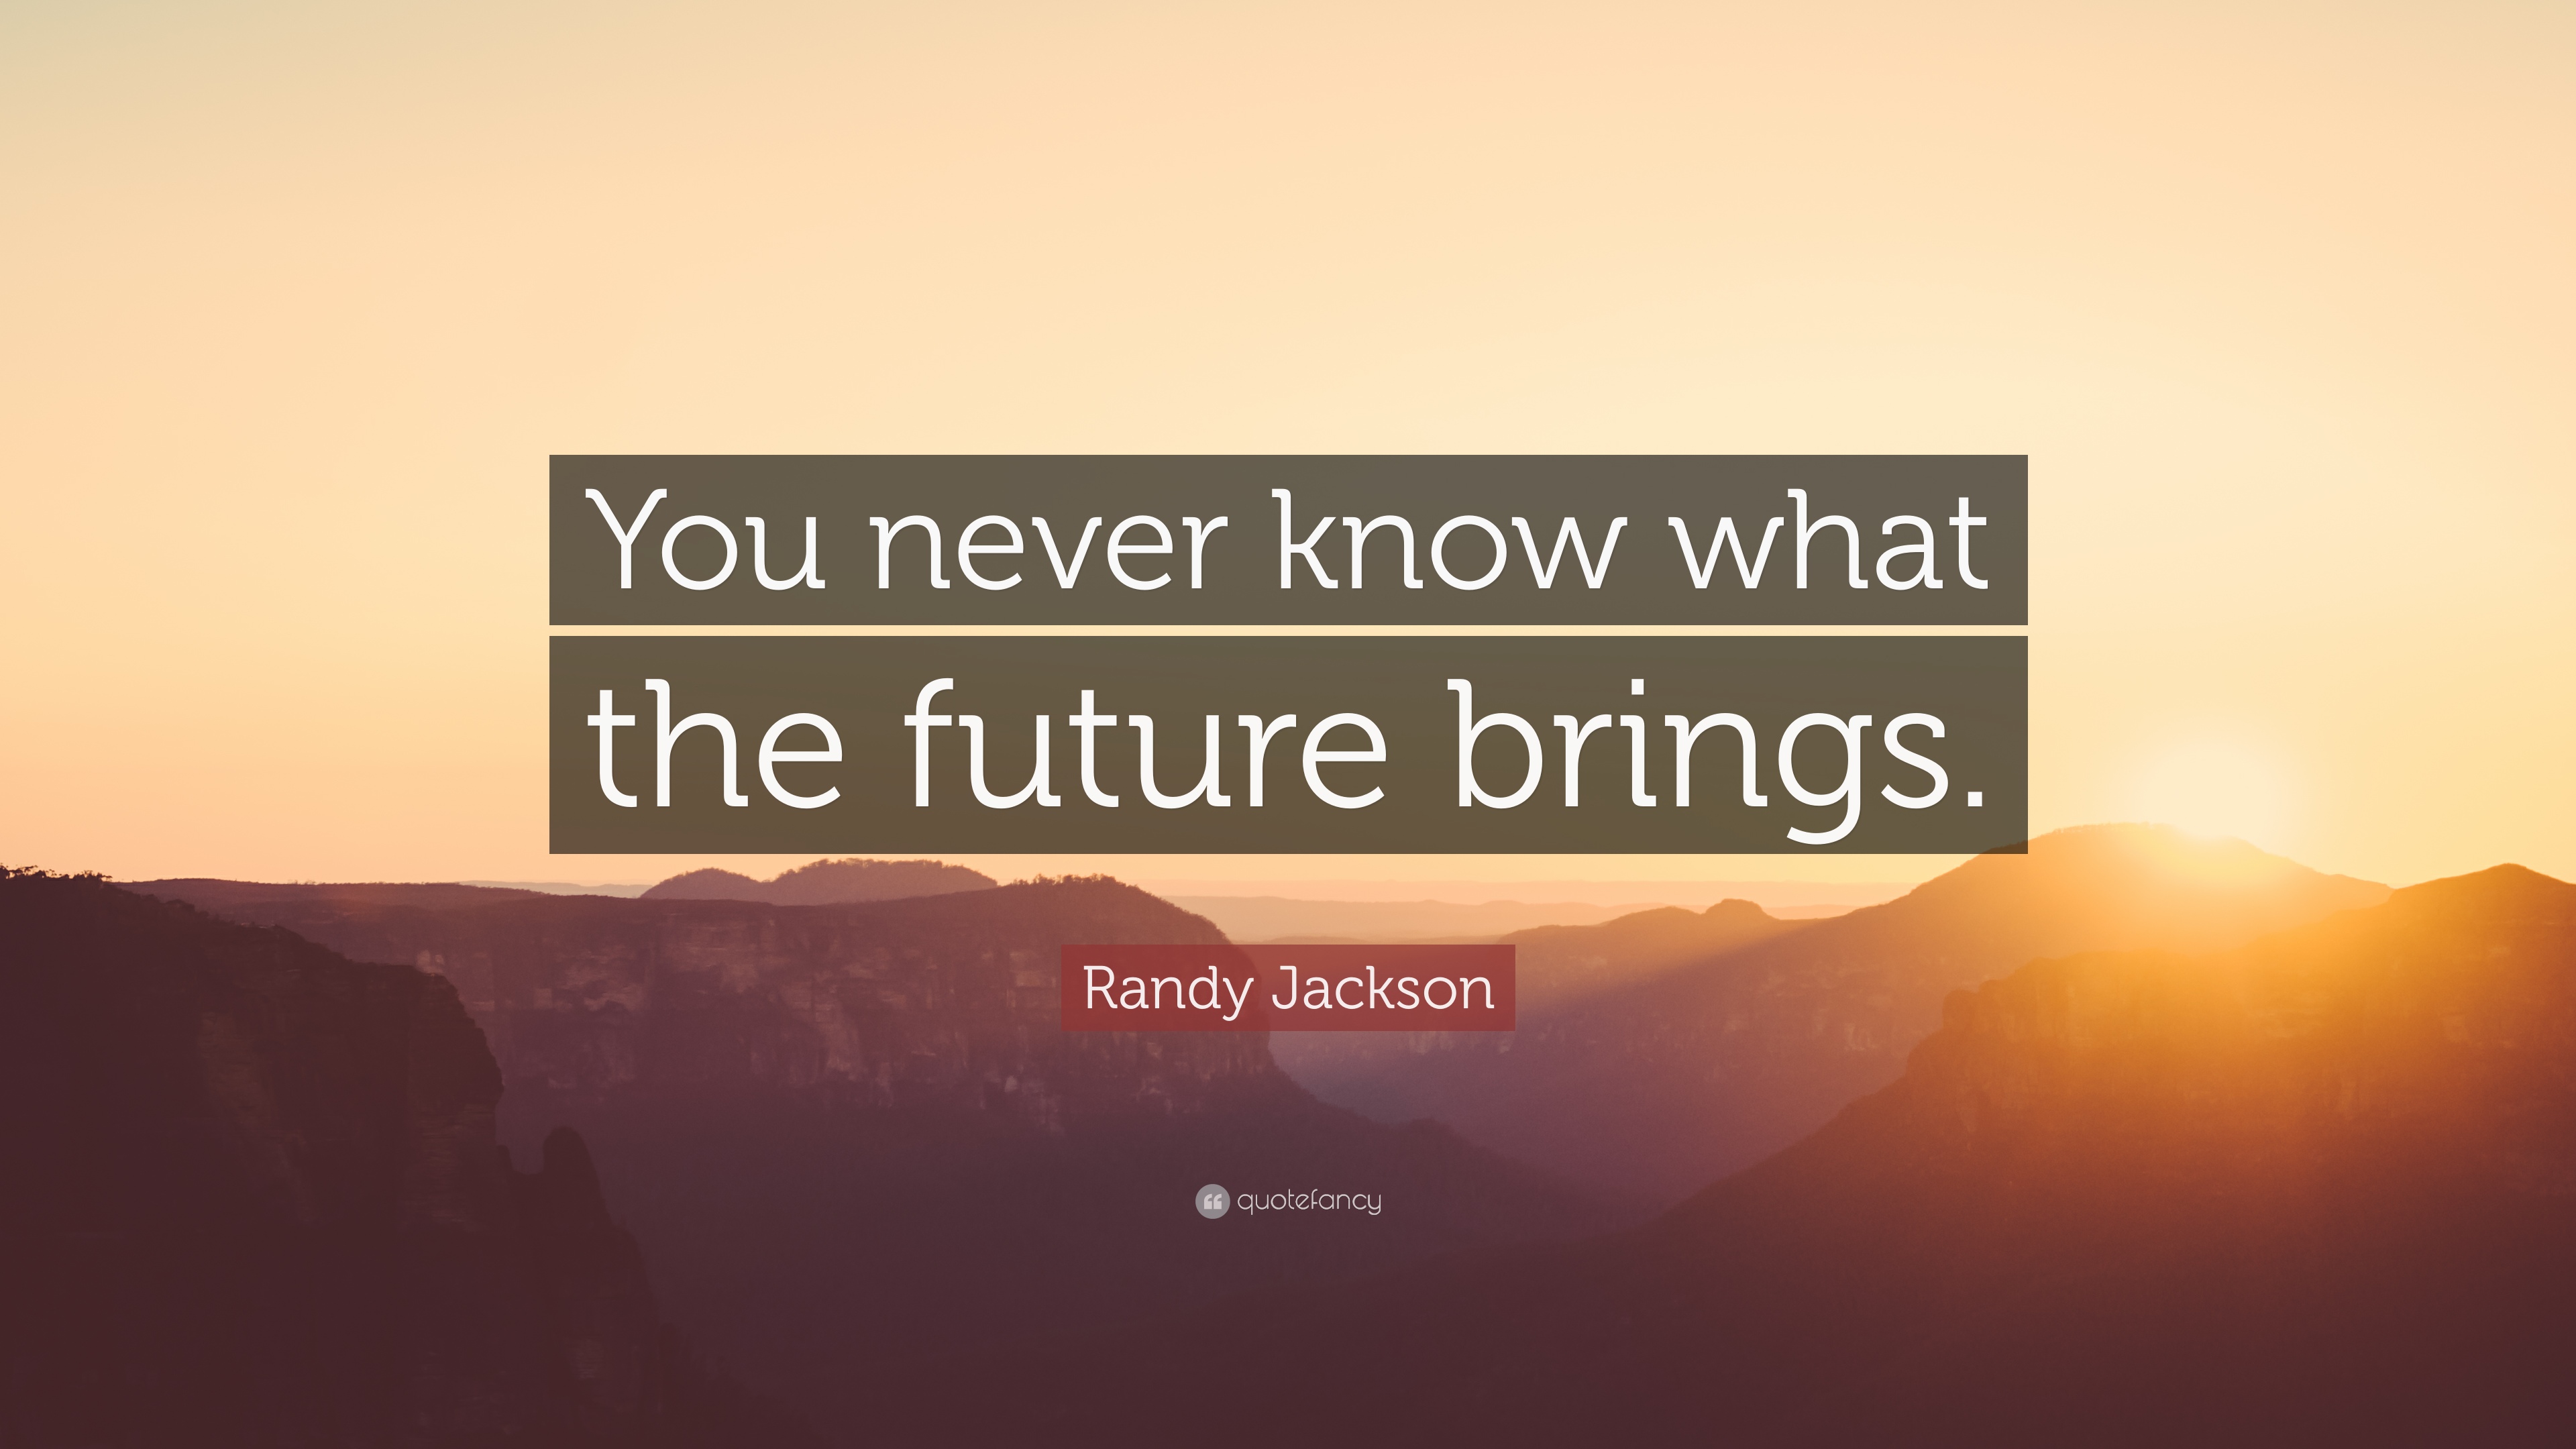 10 Best Randy Jackson Quotes